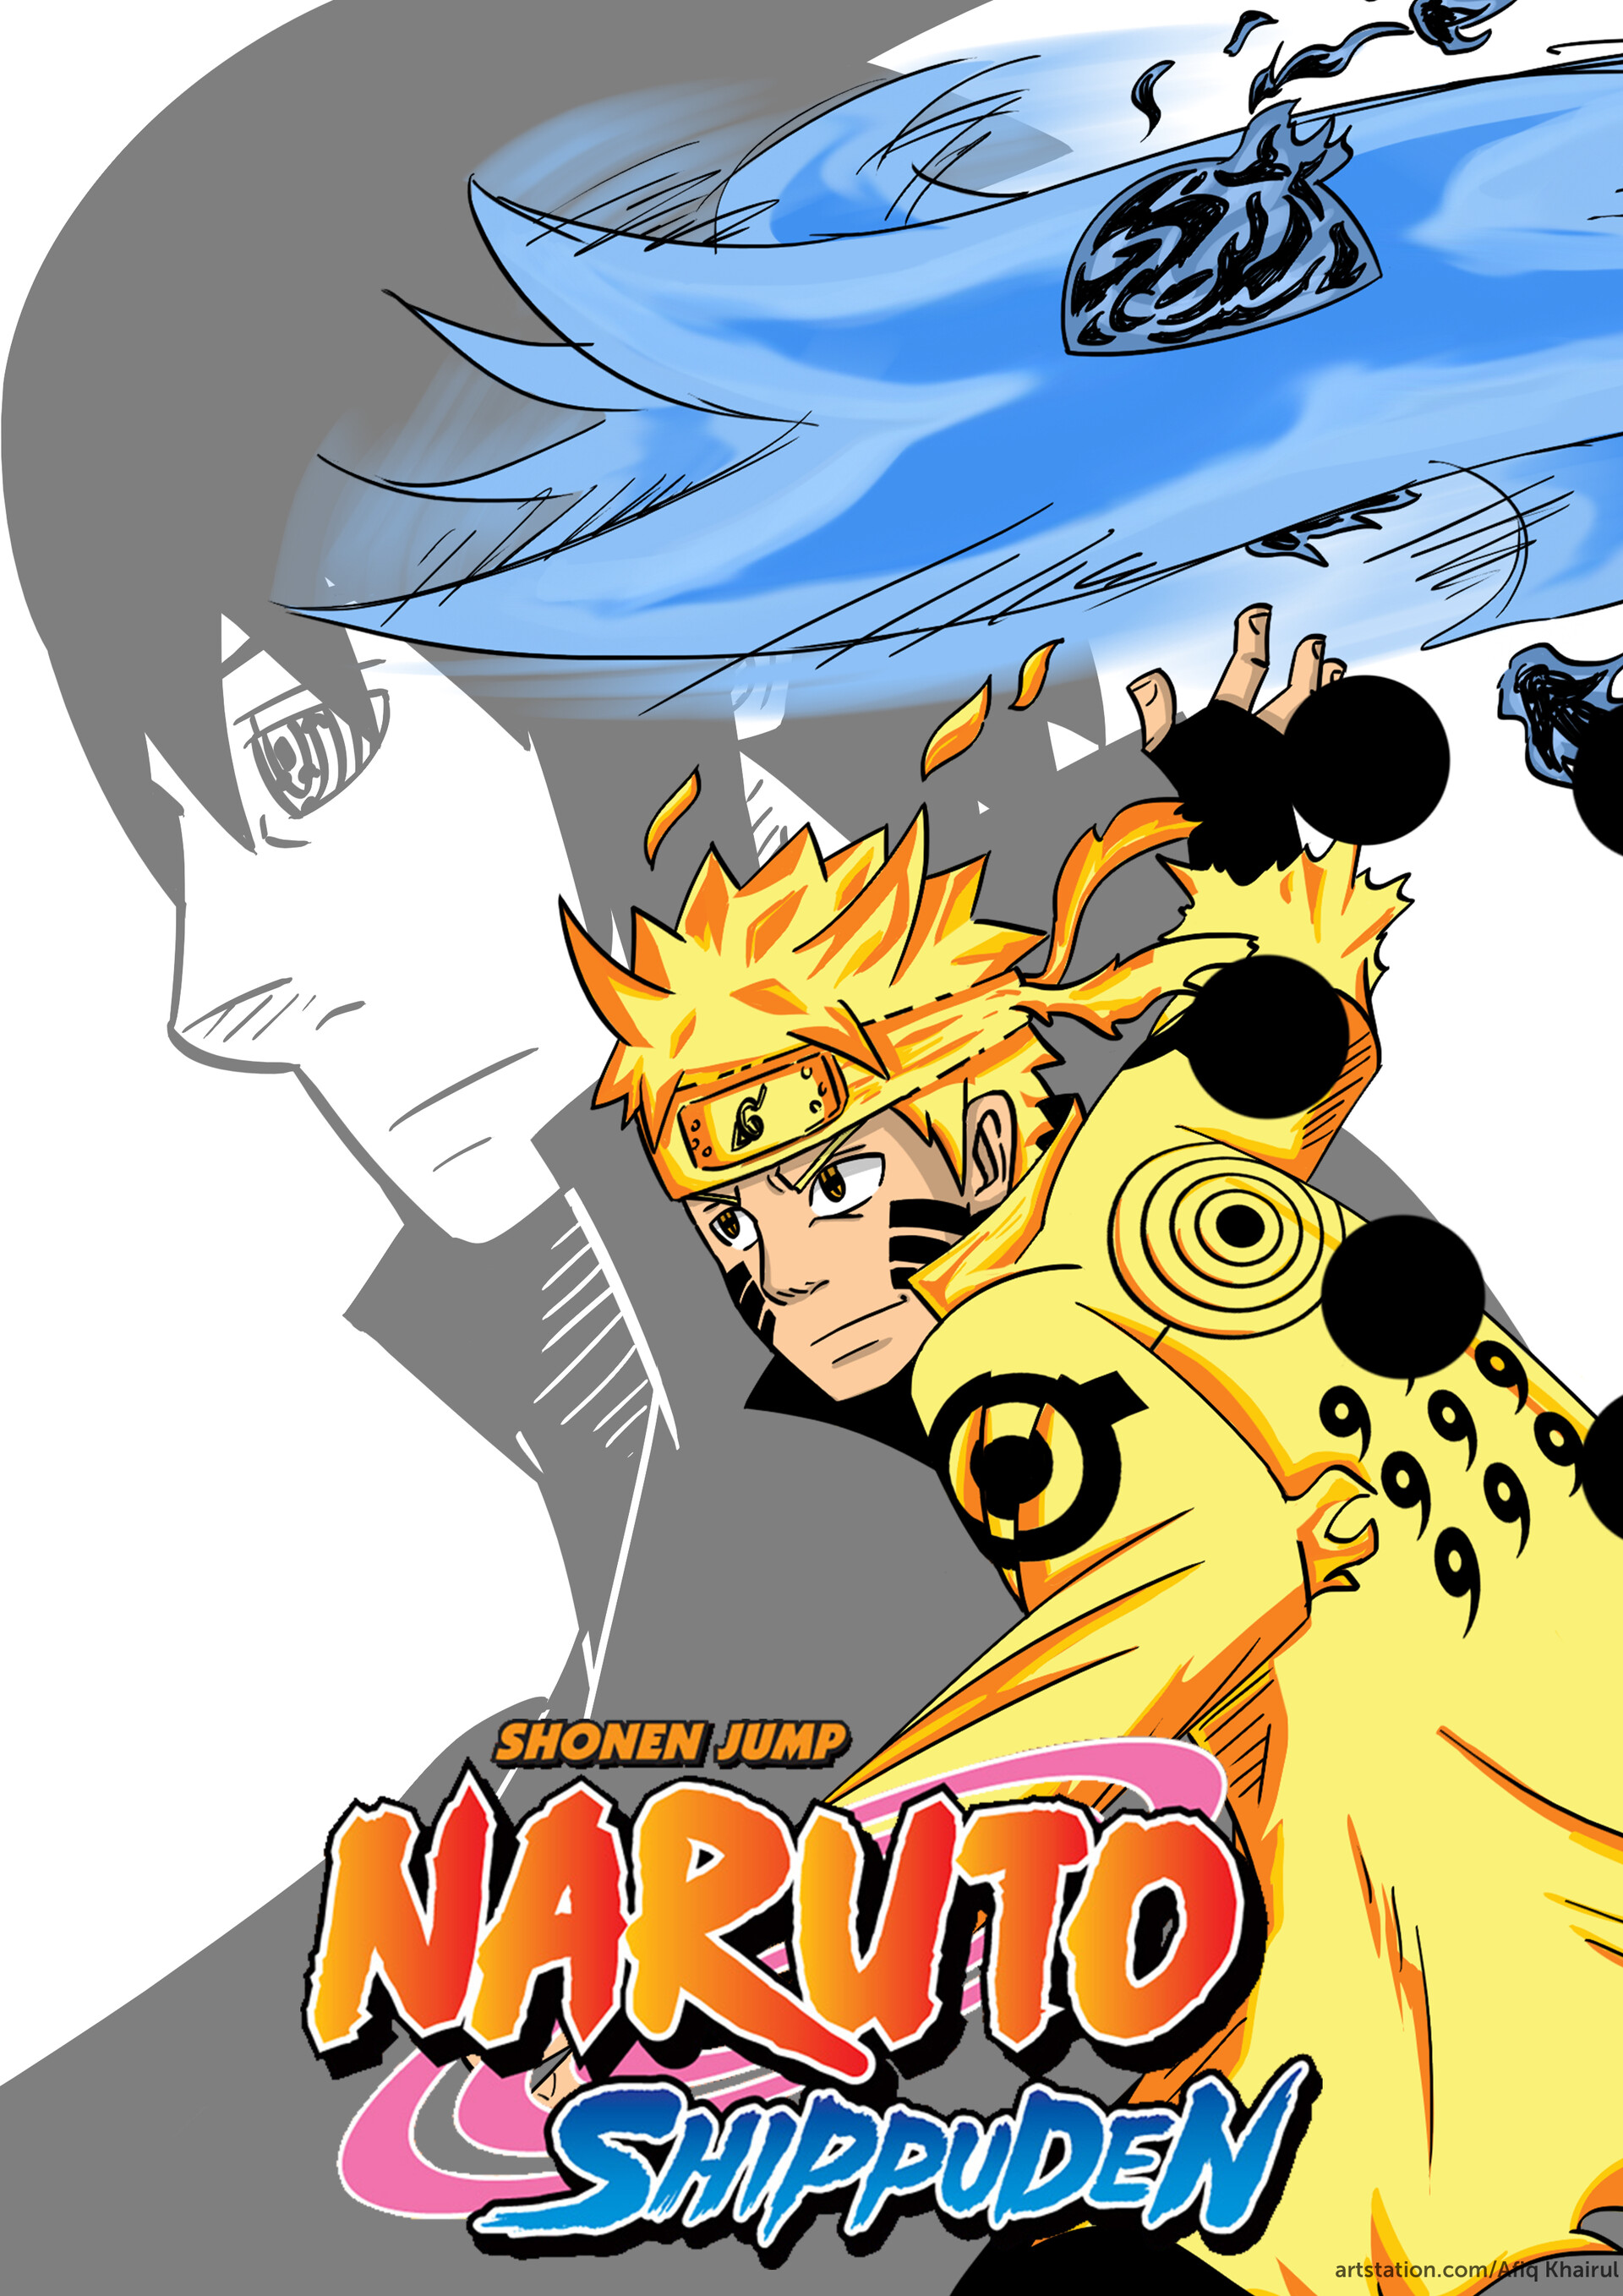 ArtStation - Naruto Fanfic Comic